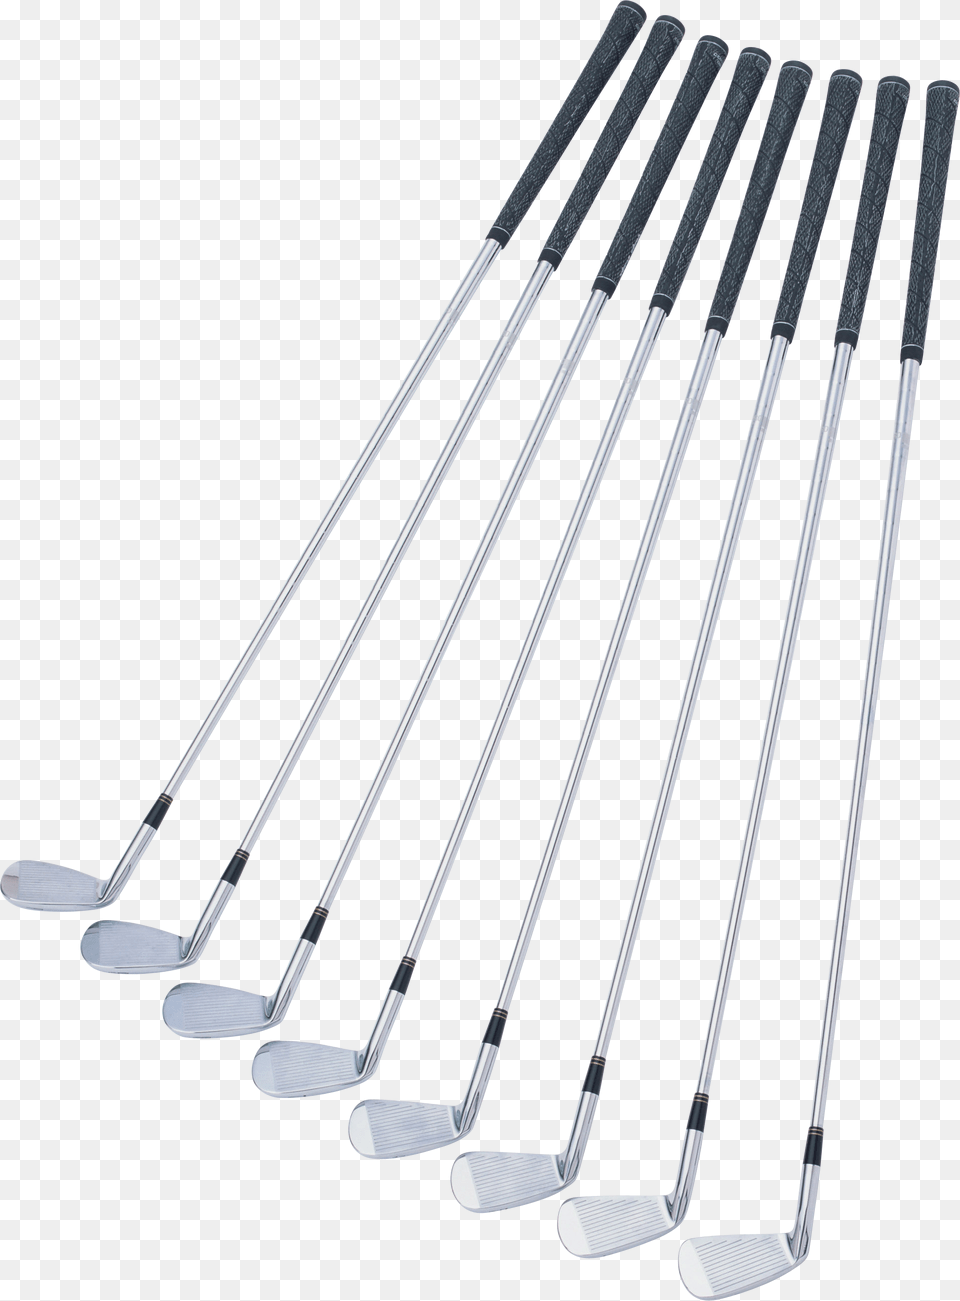 Golf, Golf Club, Sport, Putter, Ice Hockey Stick Png Image